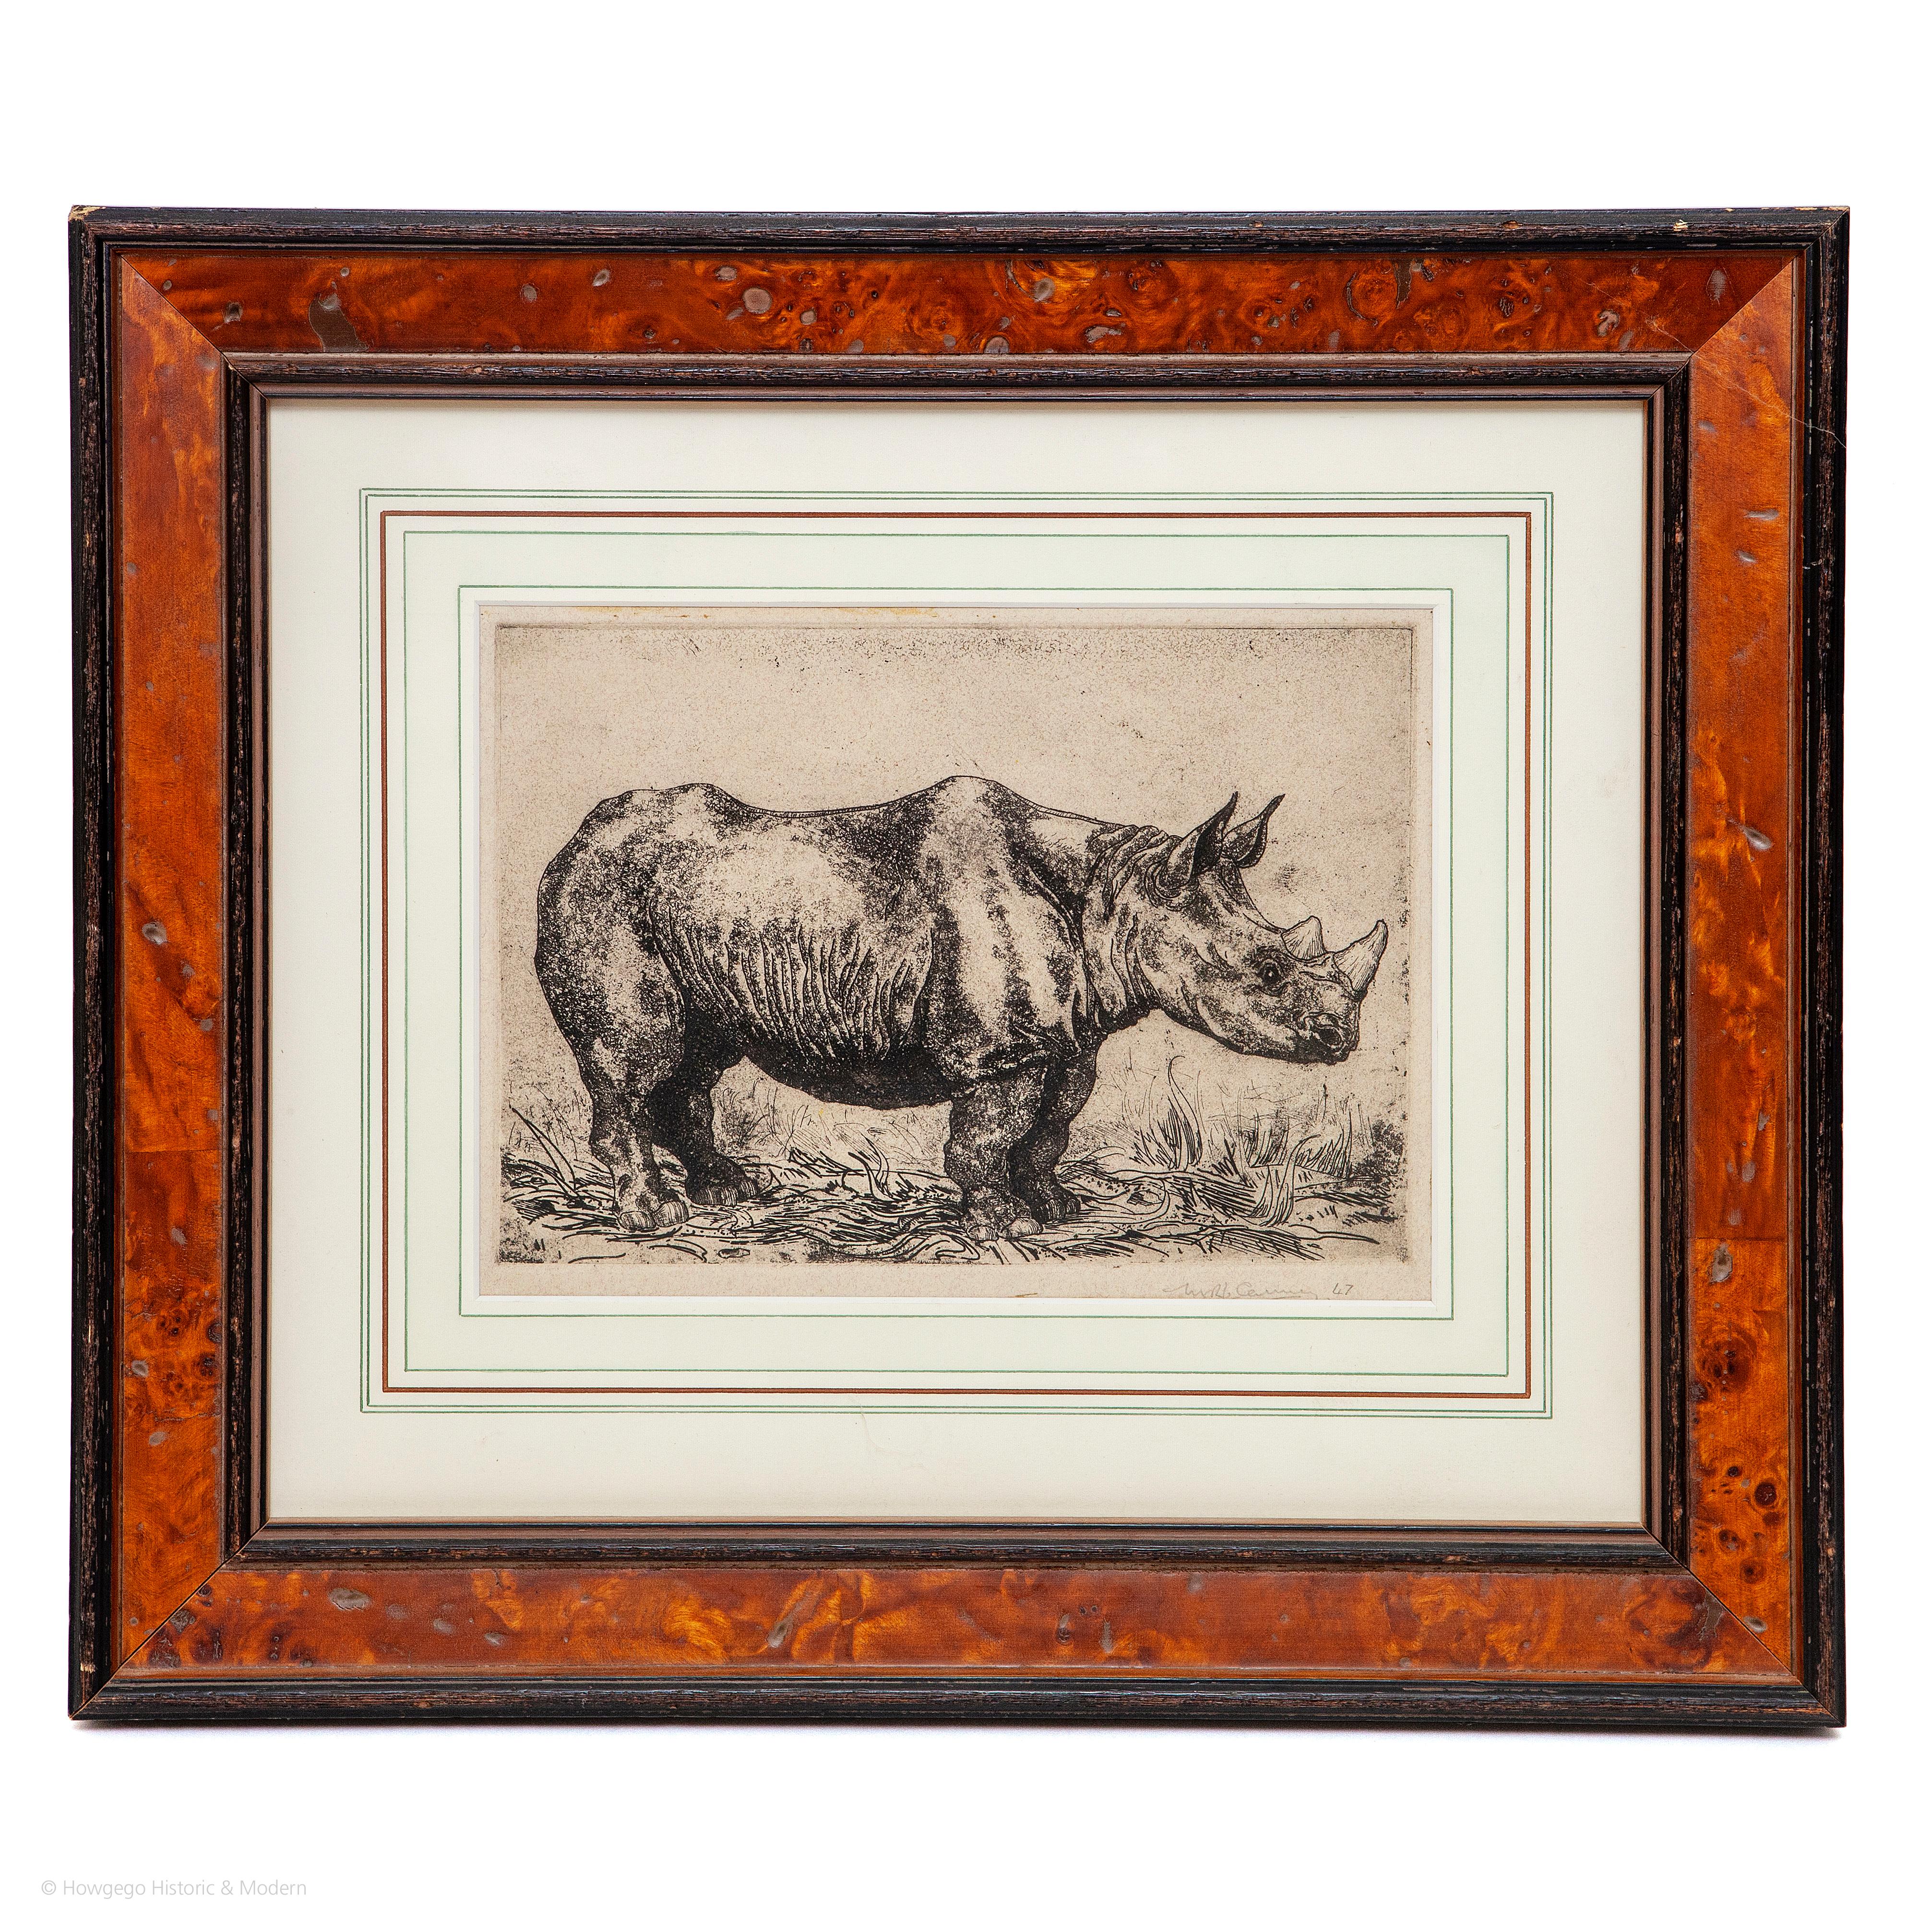 Michael Canney Rhinoceros Radierung 1947  Nach Dürers Rhinozeros 1515